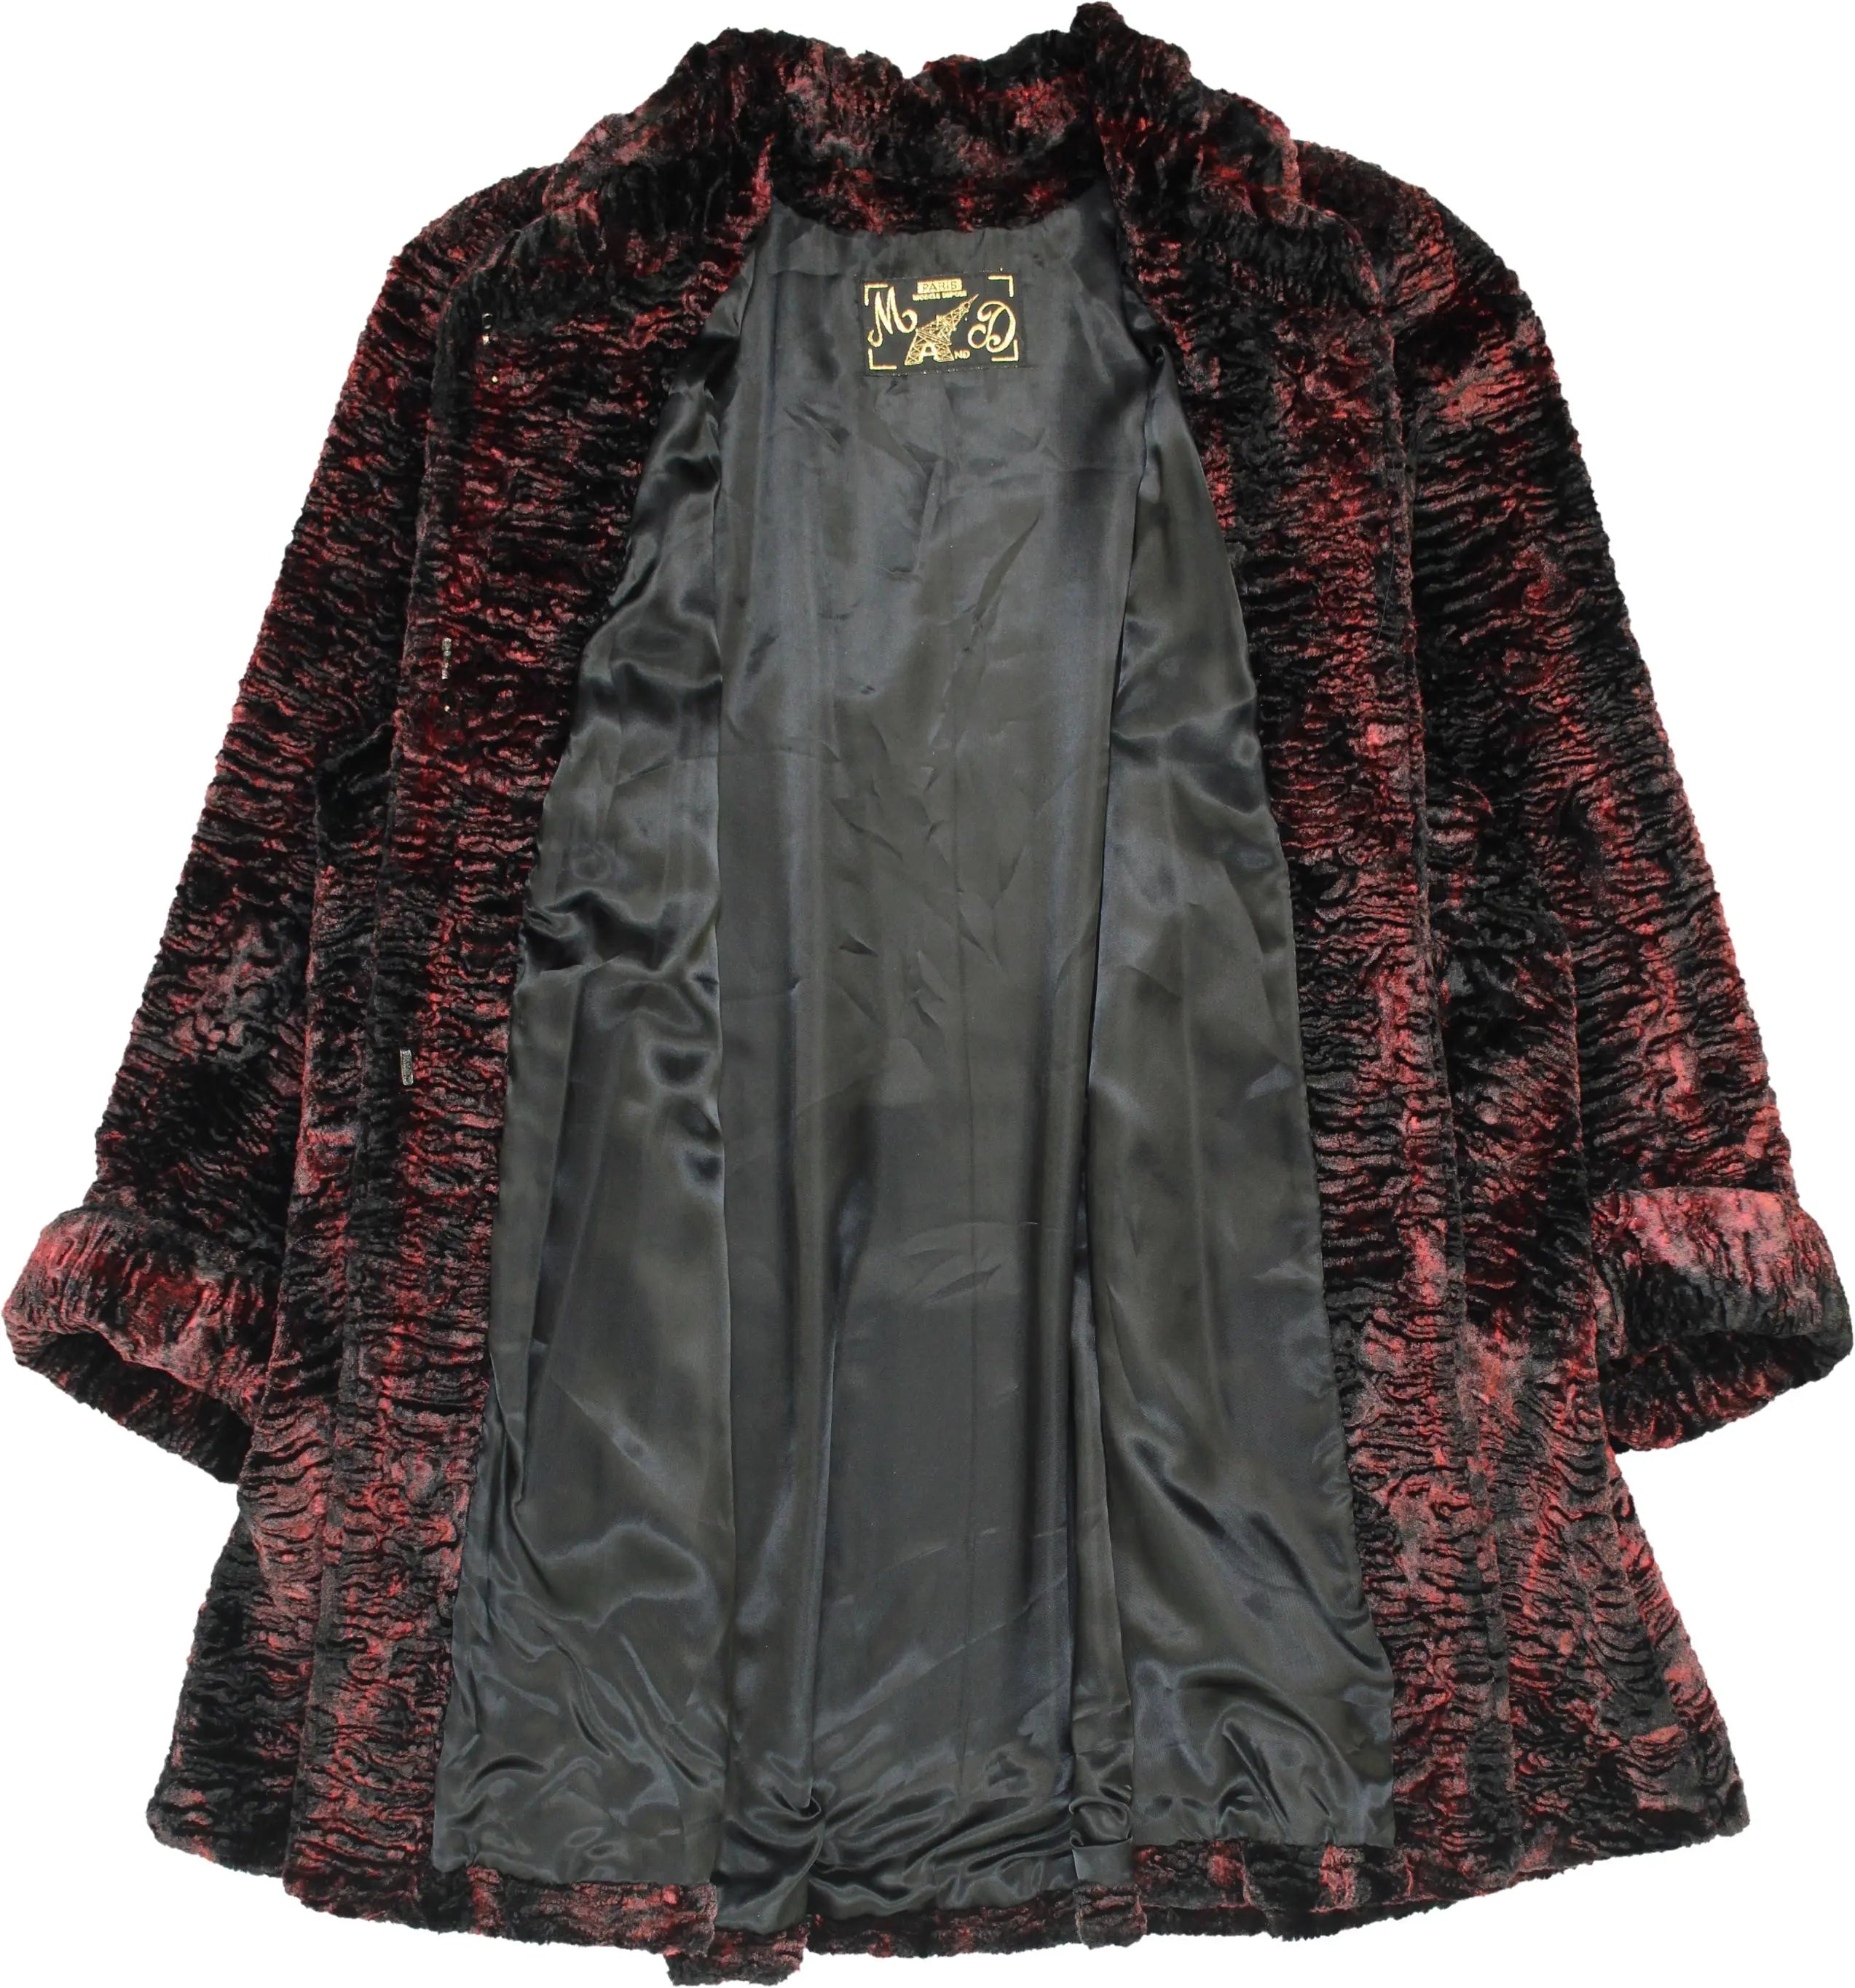 Modele Depose - Faux Fur Coat- ThriftTale.com - Vintage and second handclothing